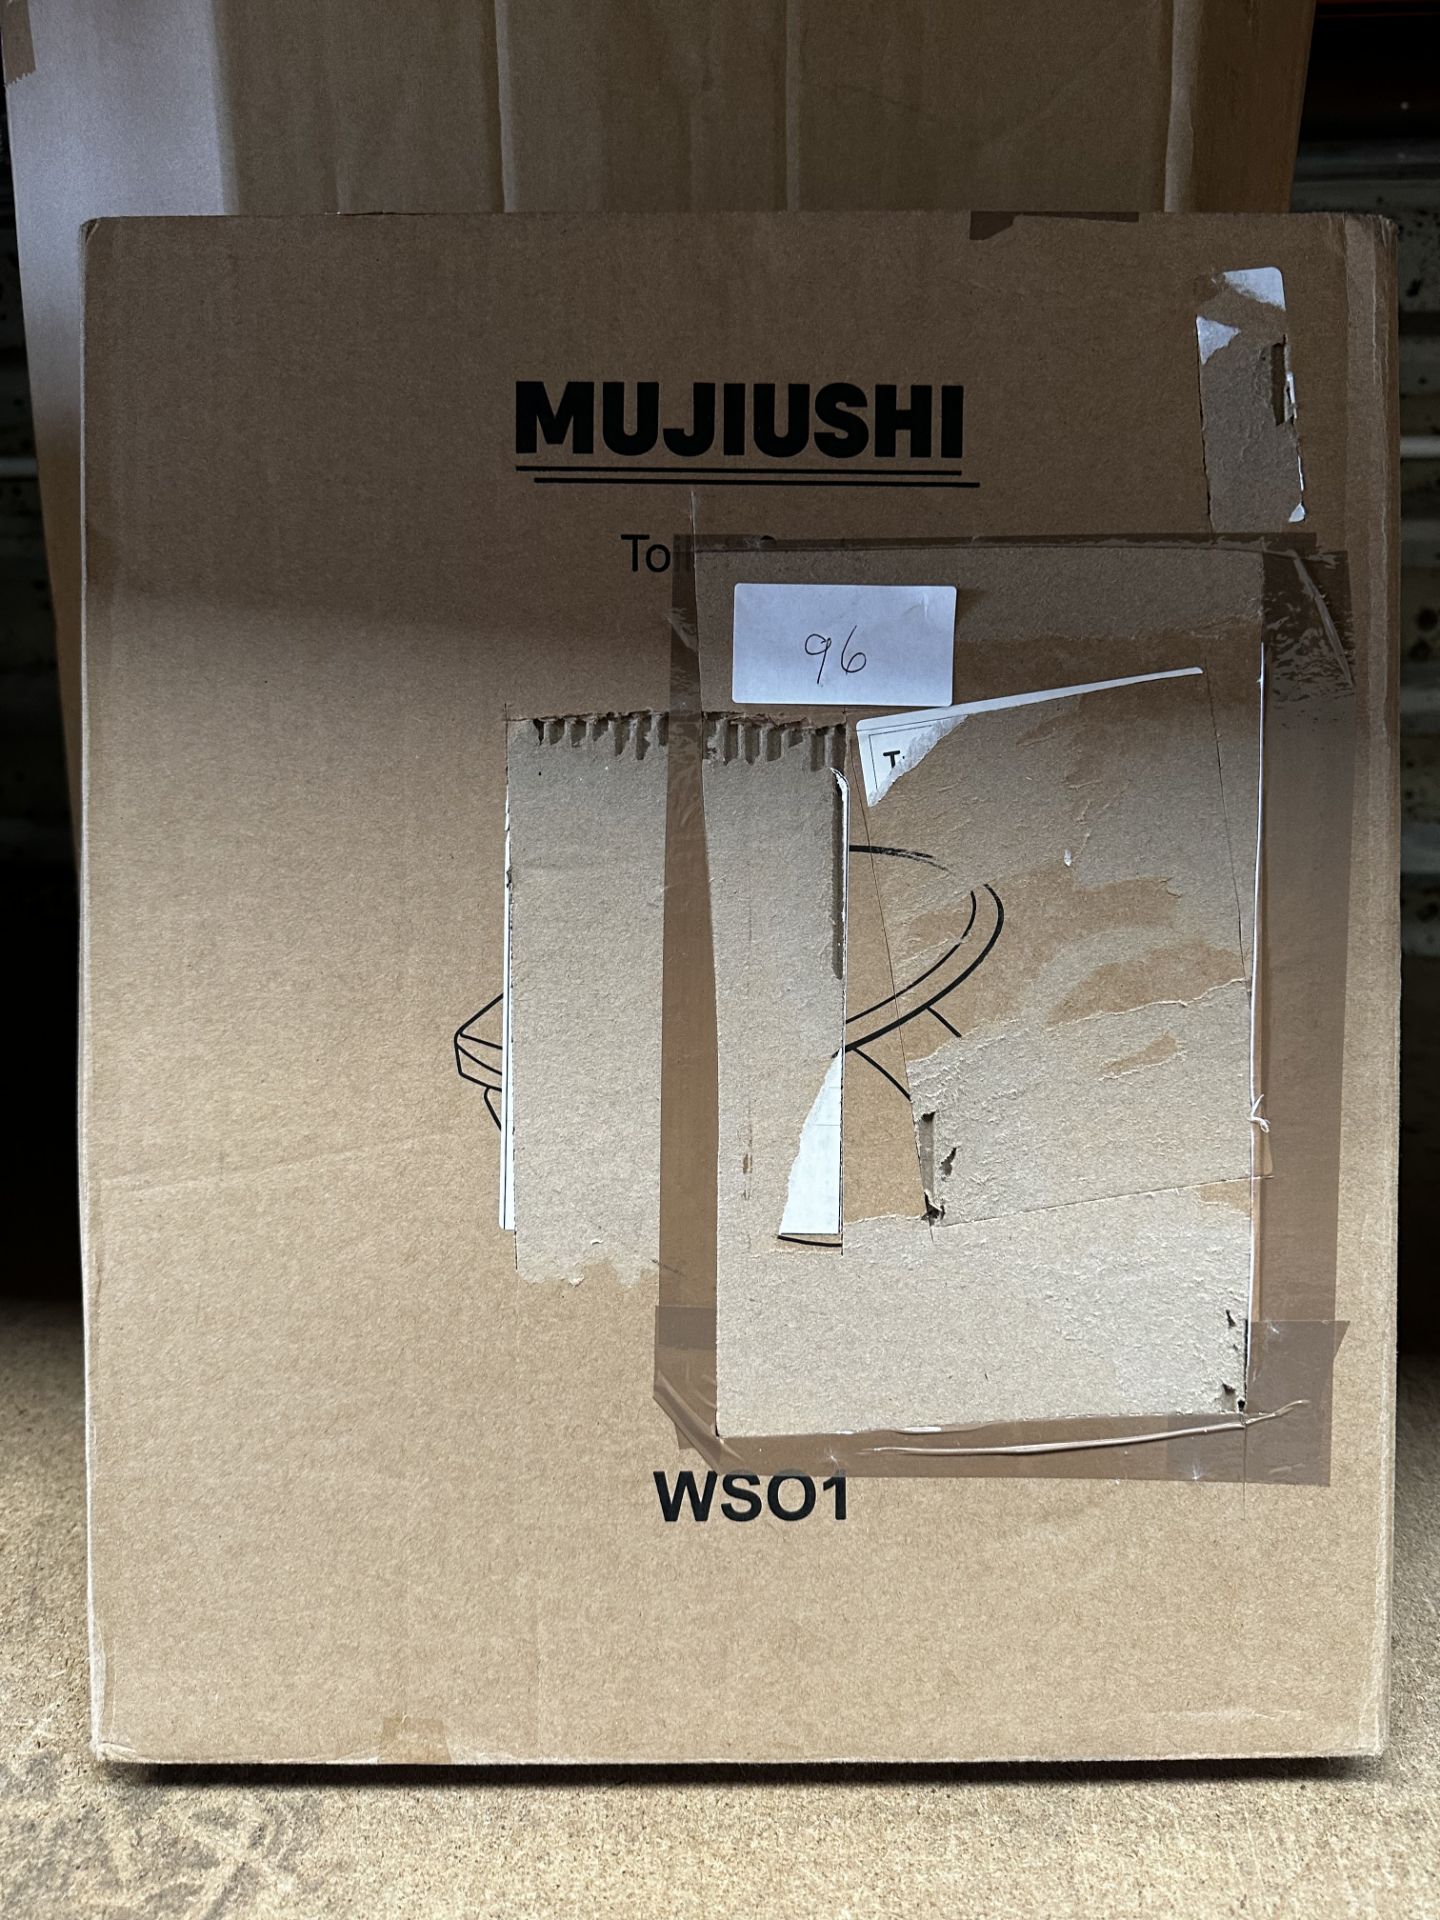 Mujiushi Toilet Seat. RRP £20 - Grade U